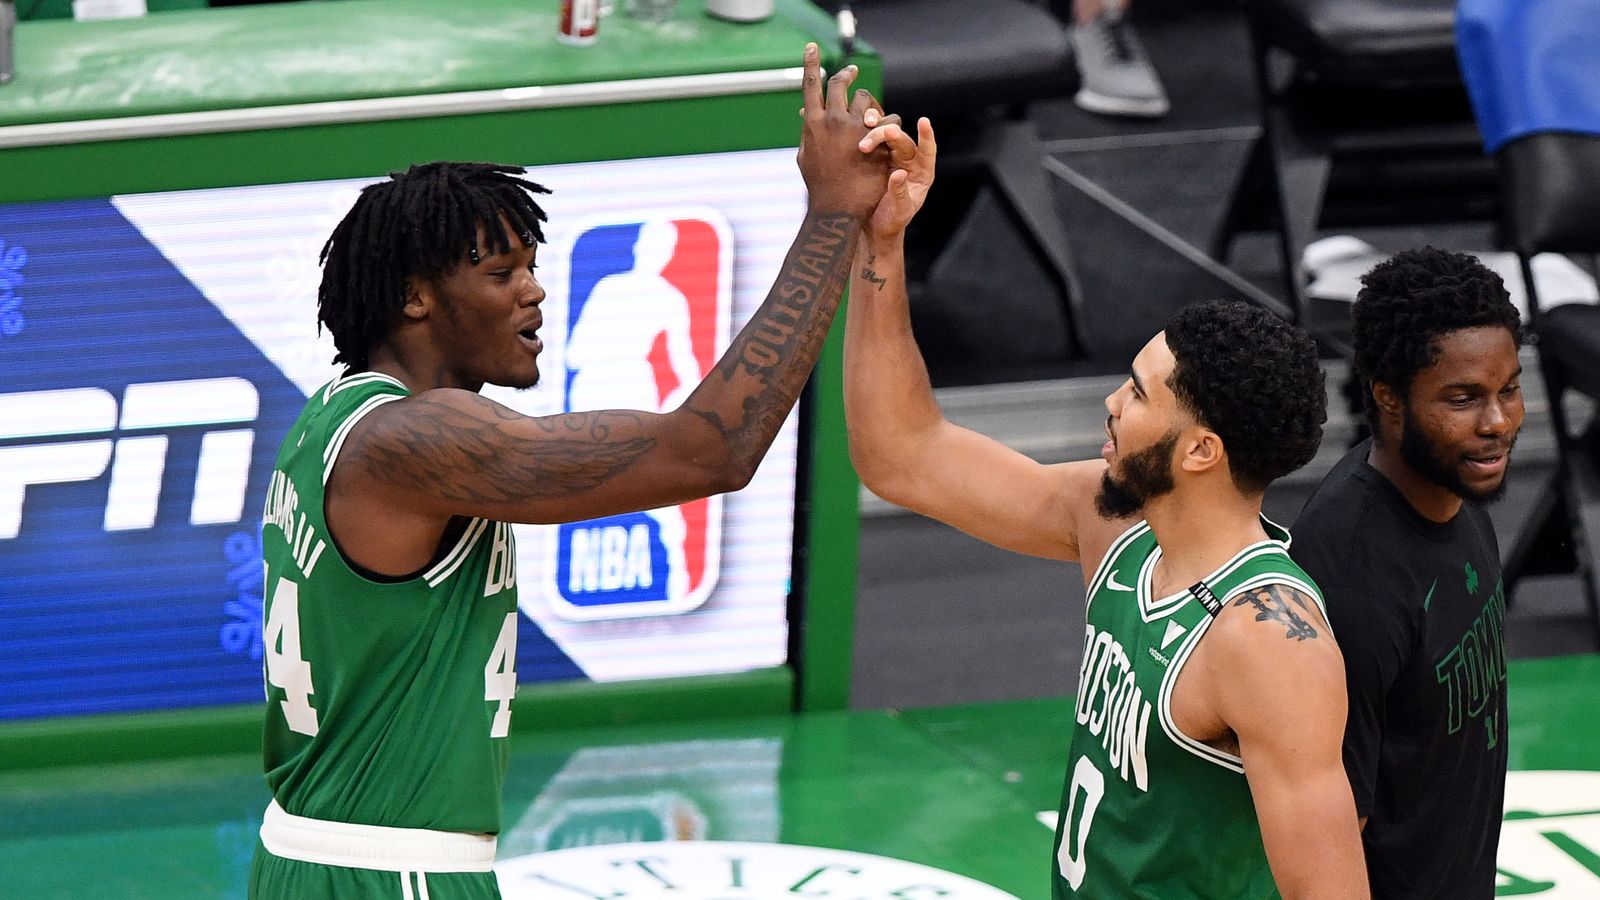 Boston Celtics: Robert Williams is emerging as a legitimate star